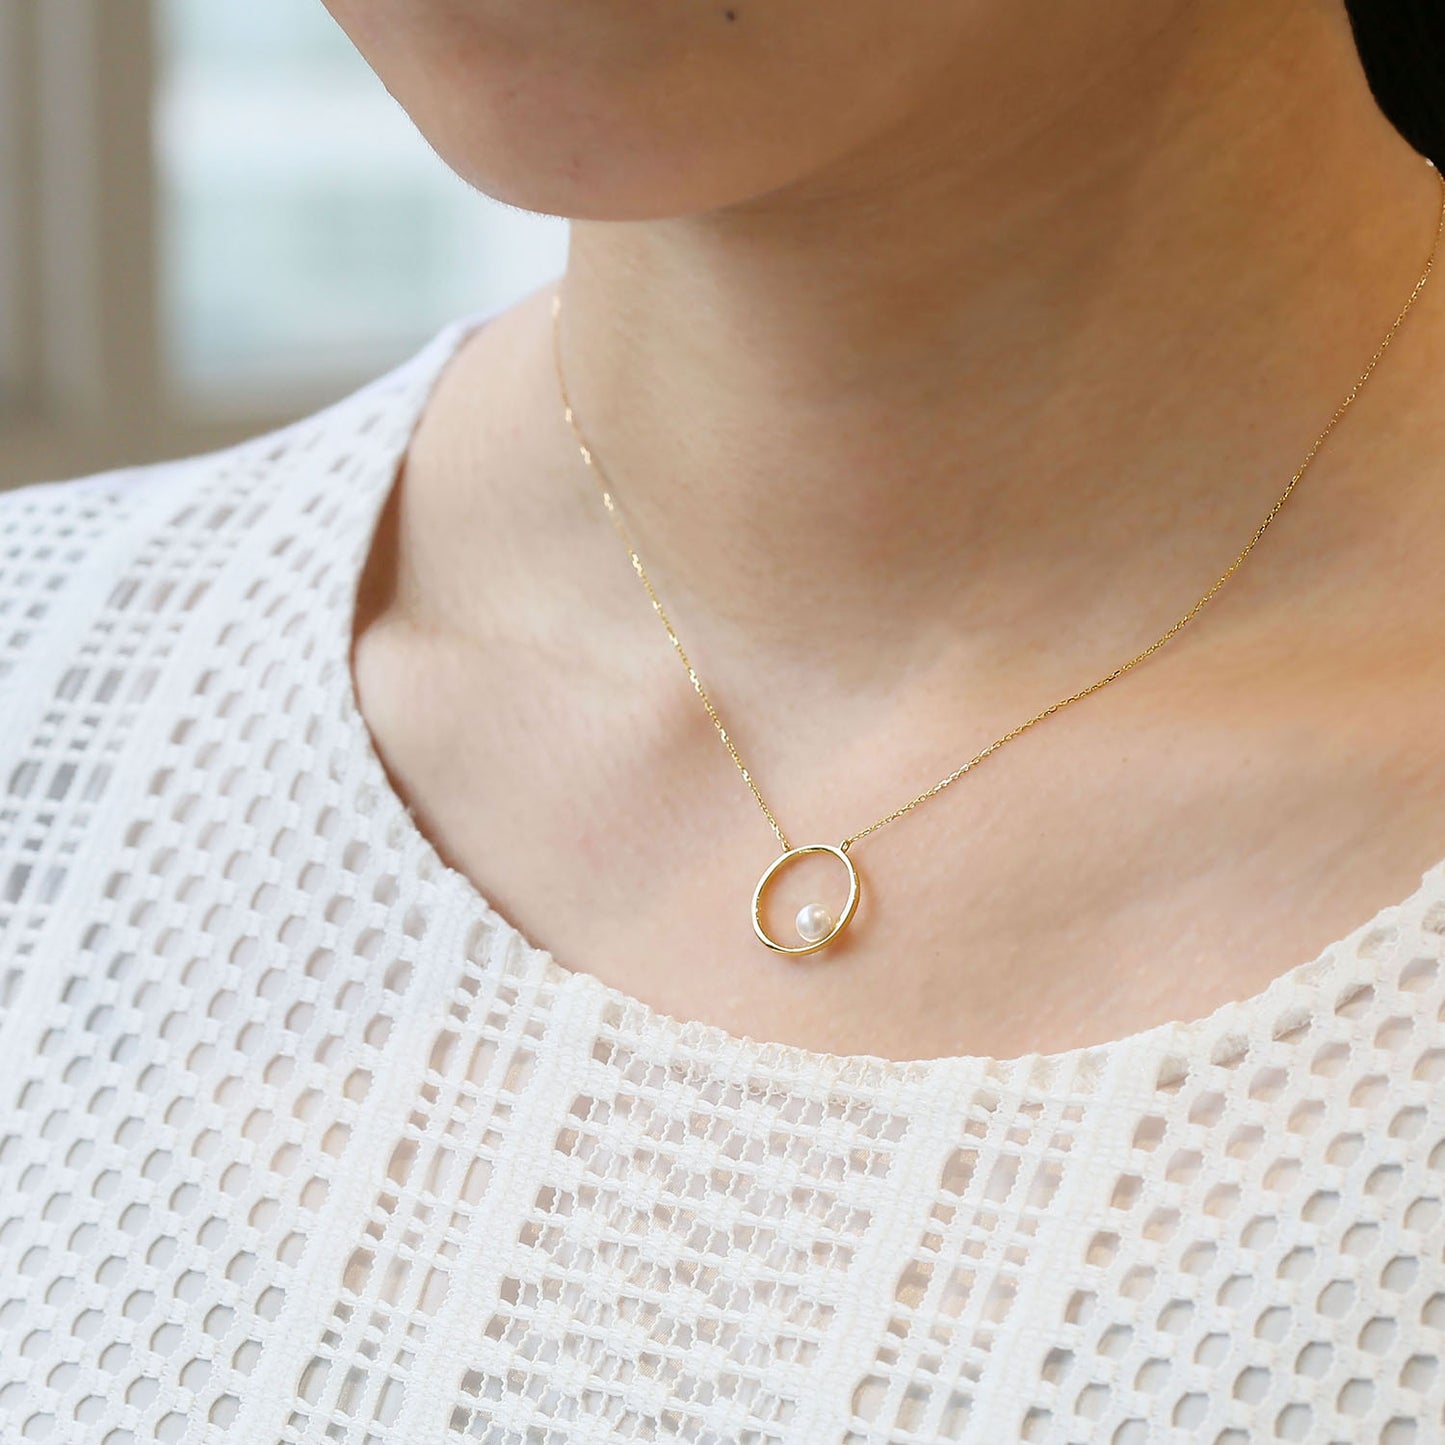 K18YG Akoya pearl necklace |96-1208